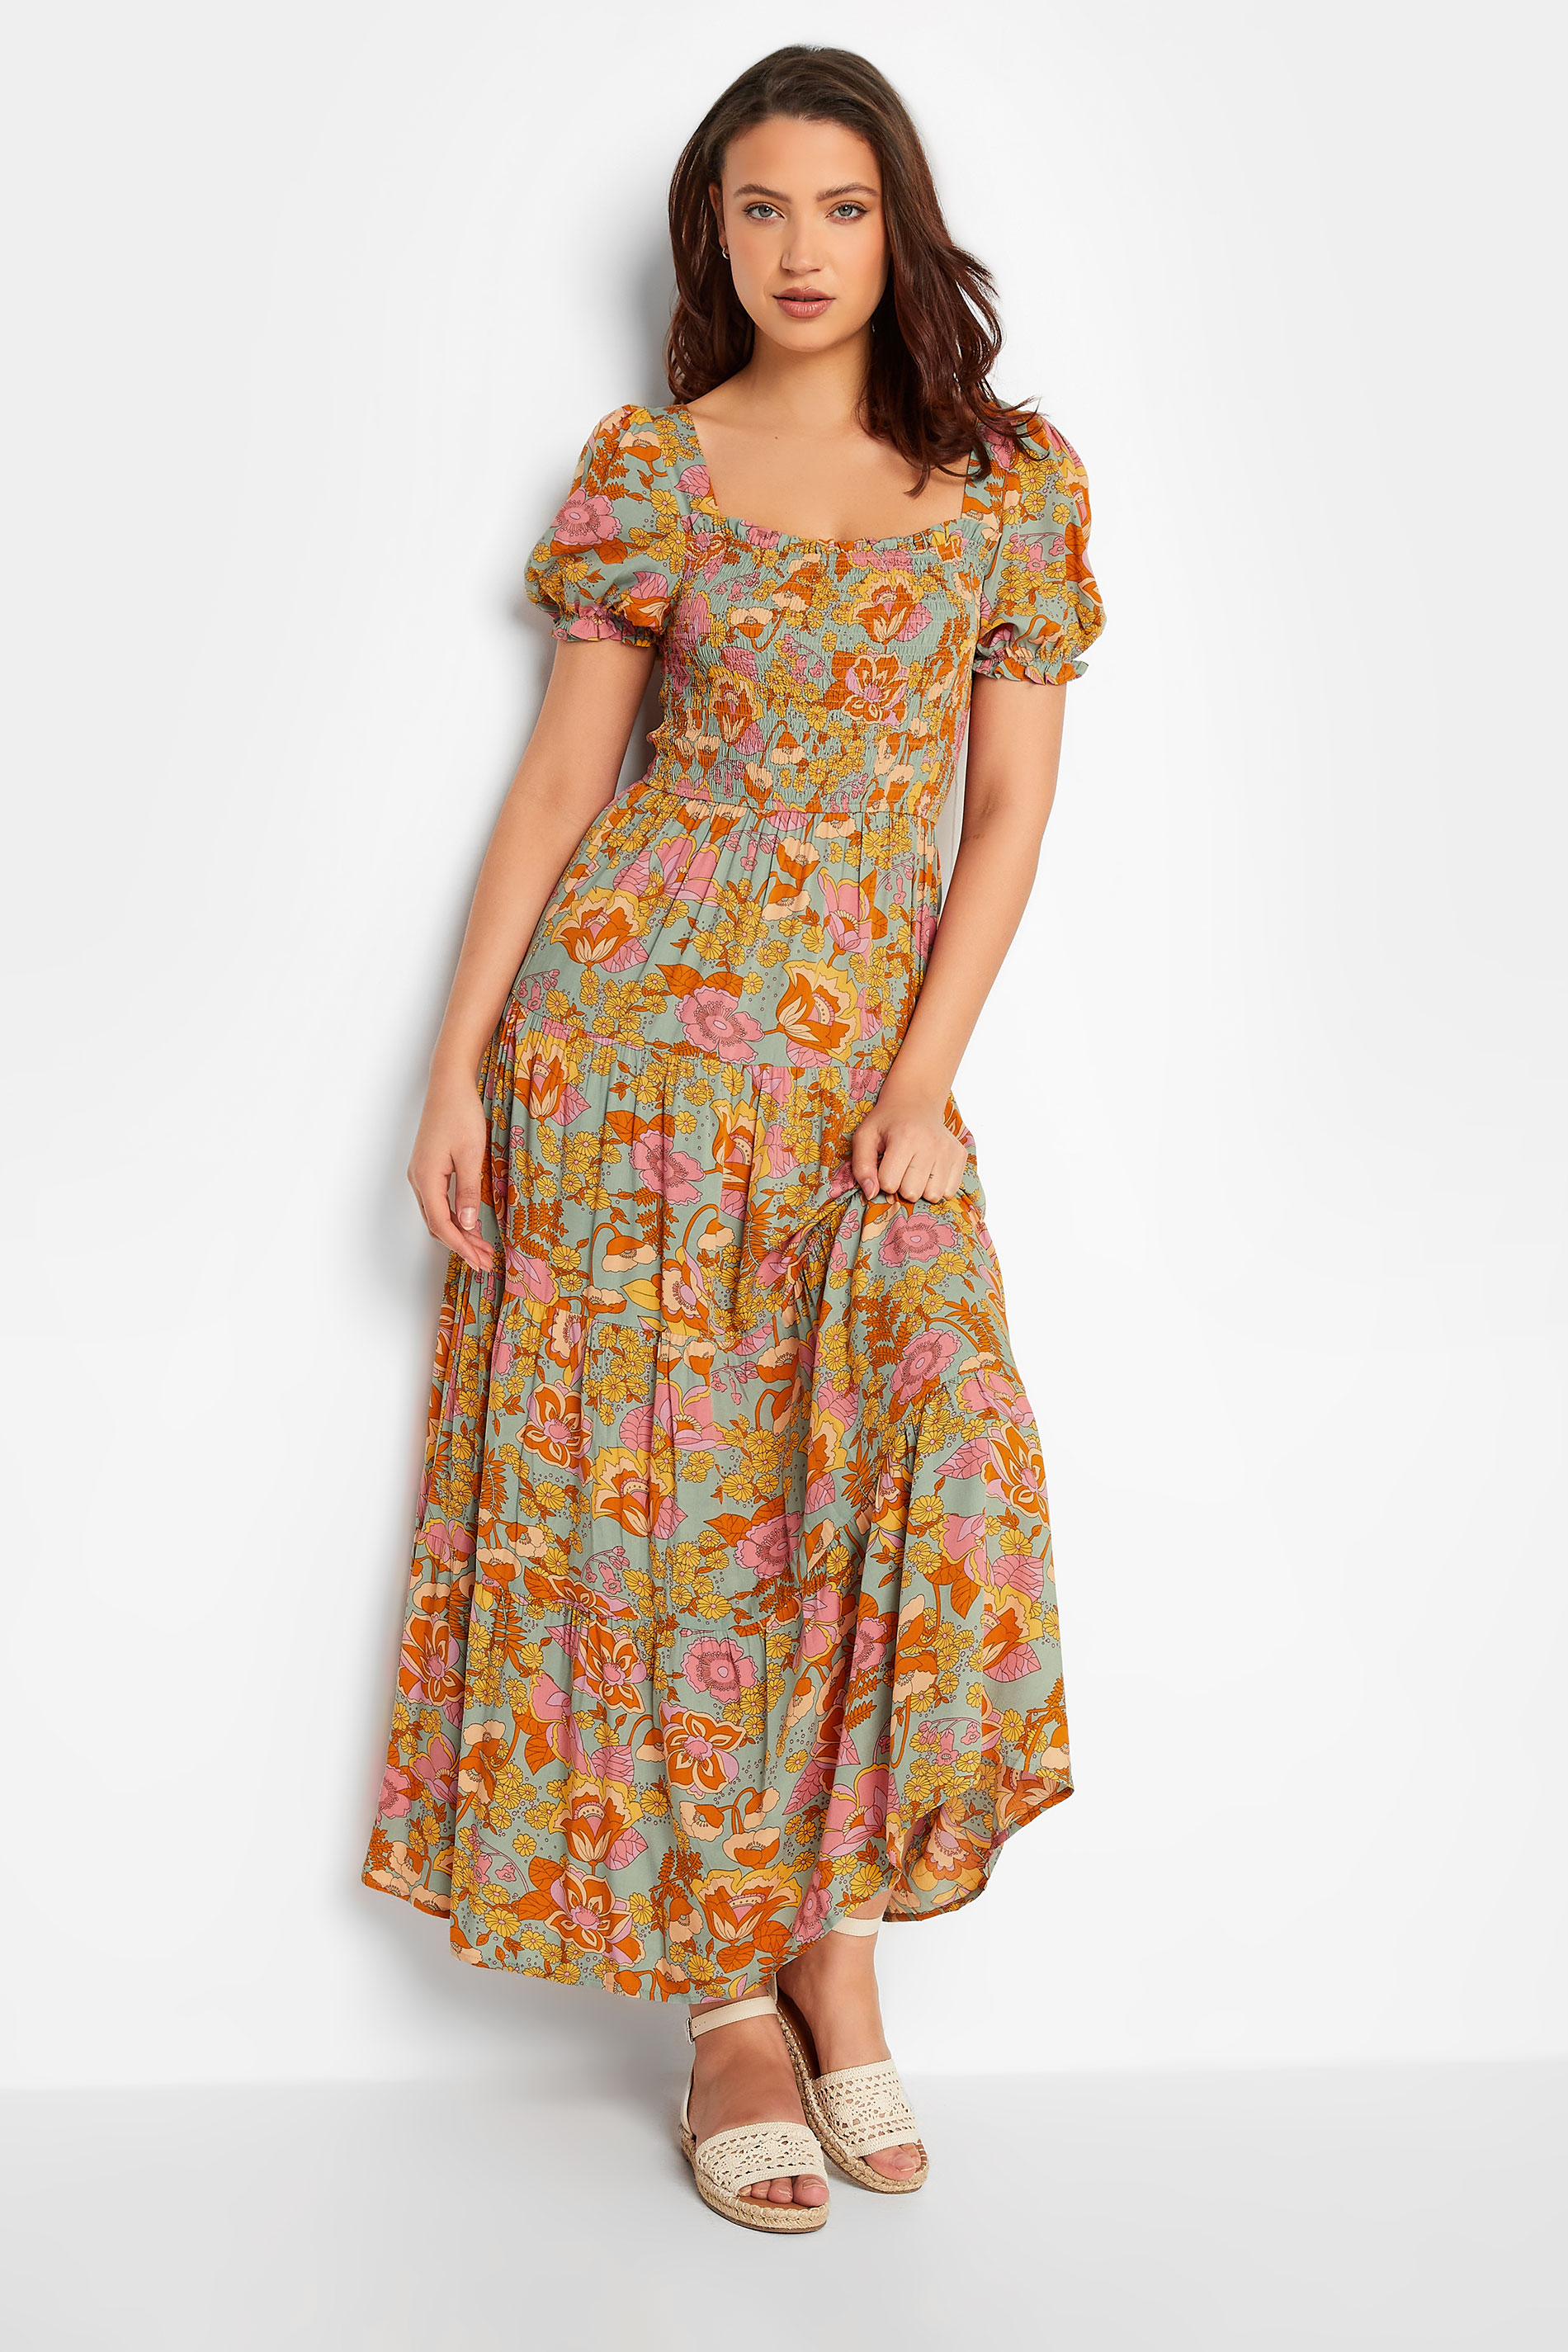 LTS Tall Orange Floral Square Neck Maxi Dress | Long Tall Sally  1